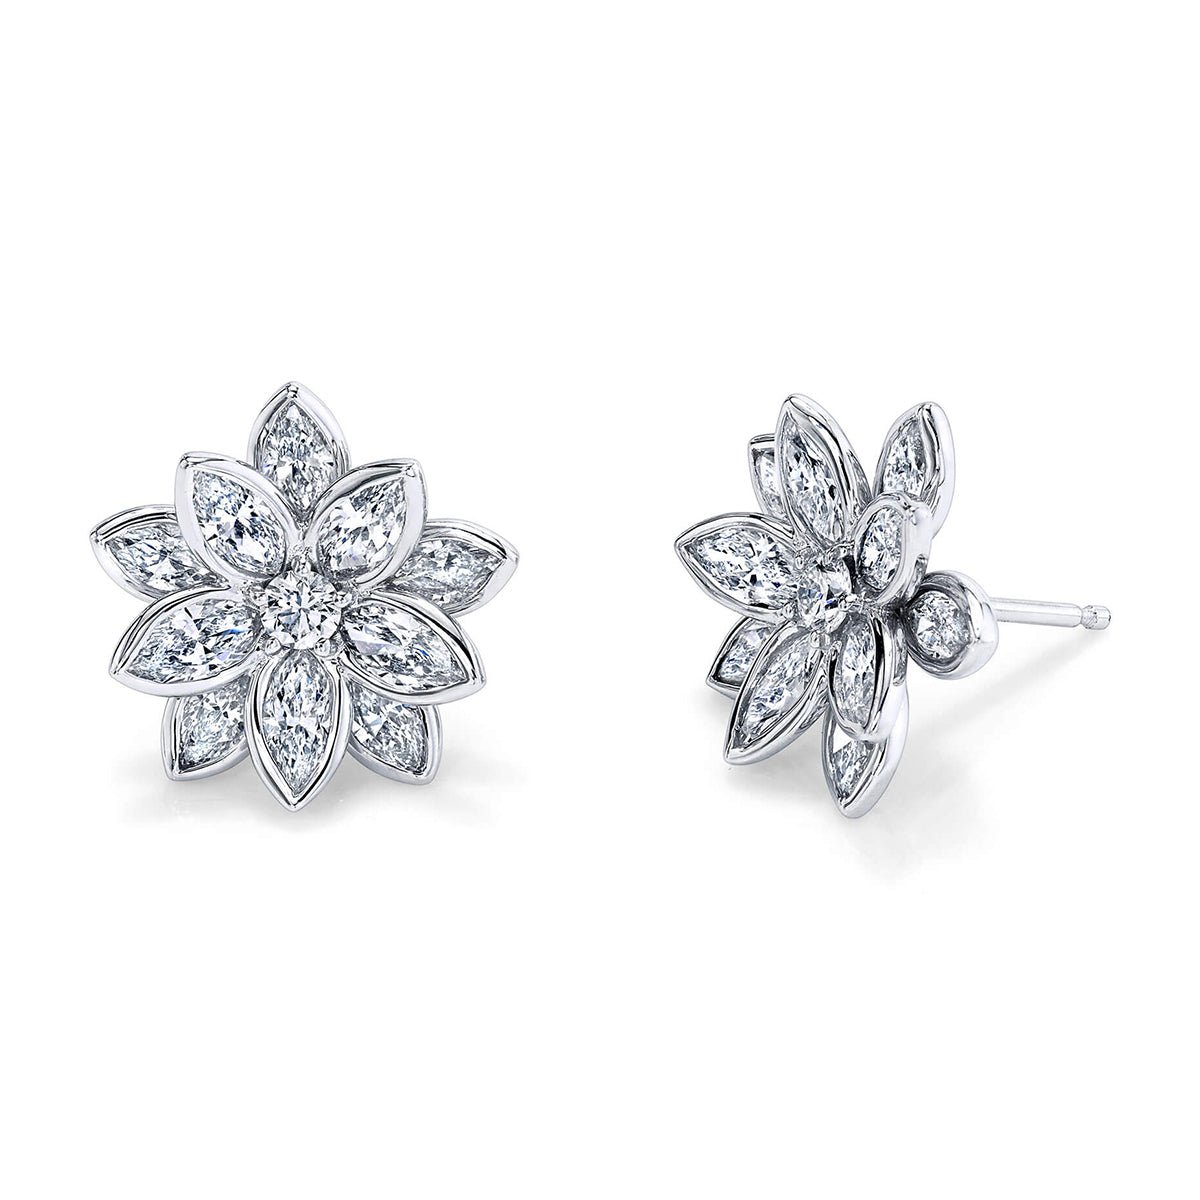 Greenleaf & Crosby - 18k White Gold Diamond Lotus Flower Earrings